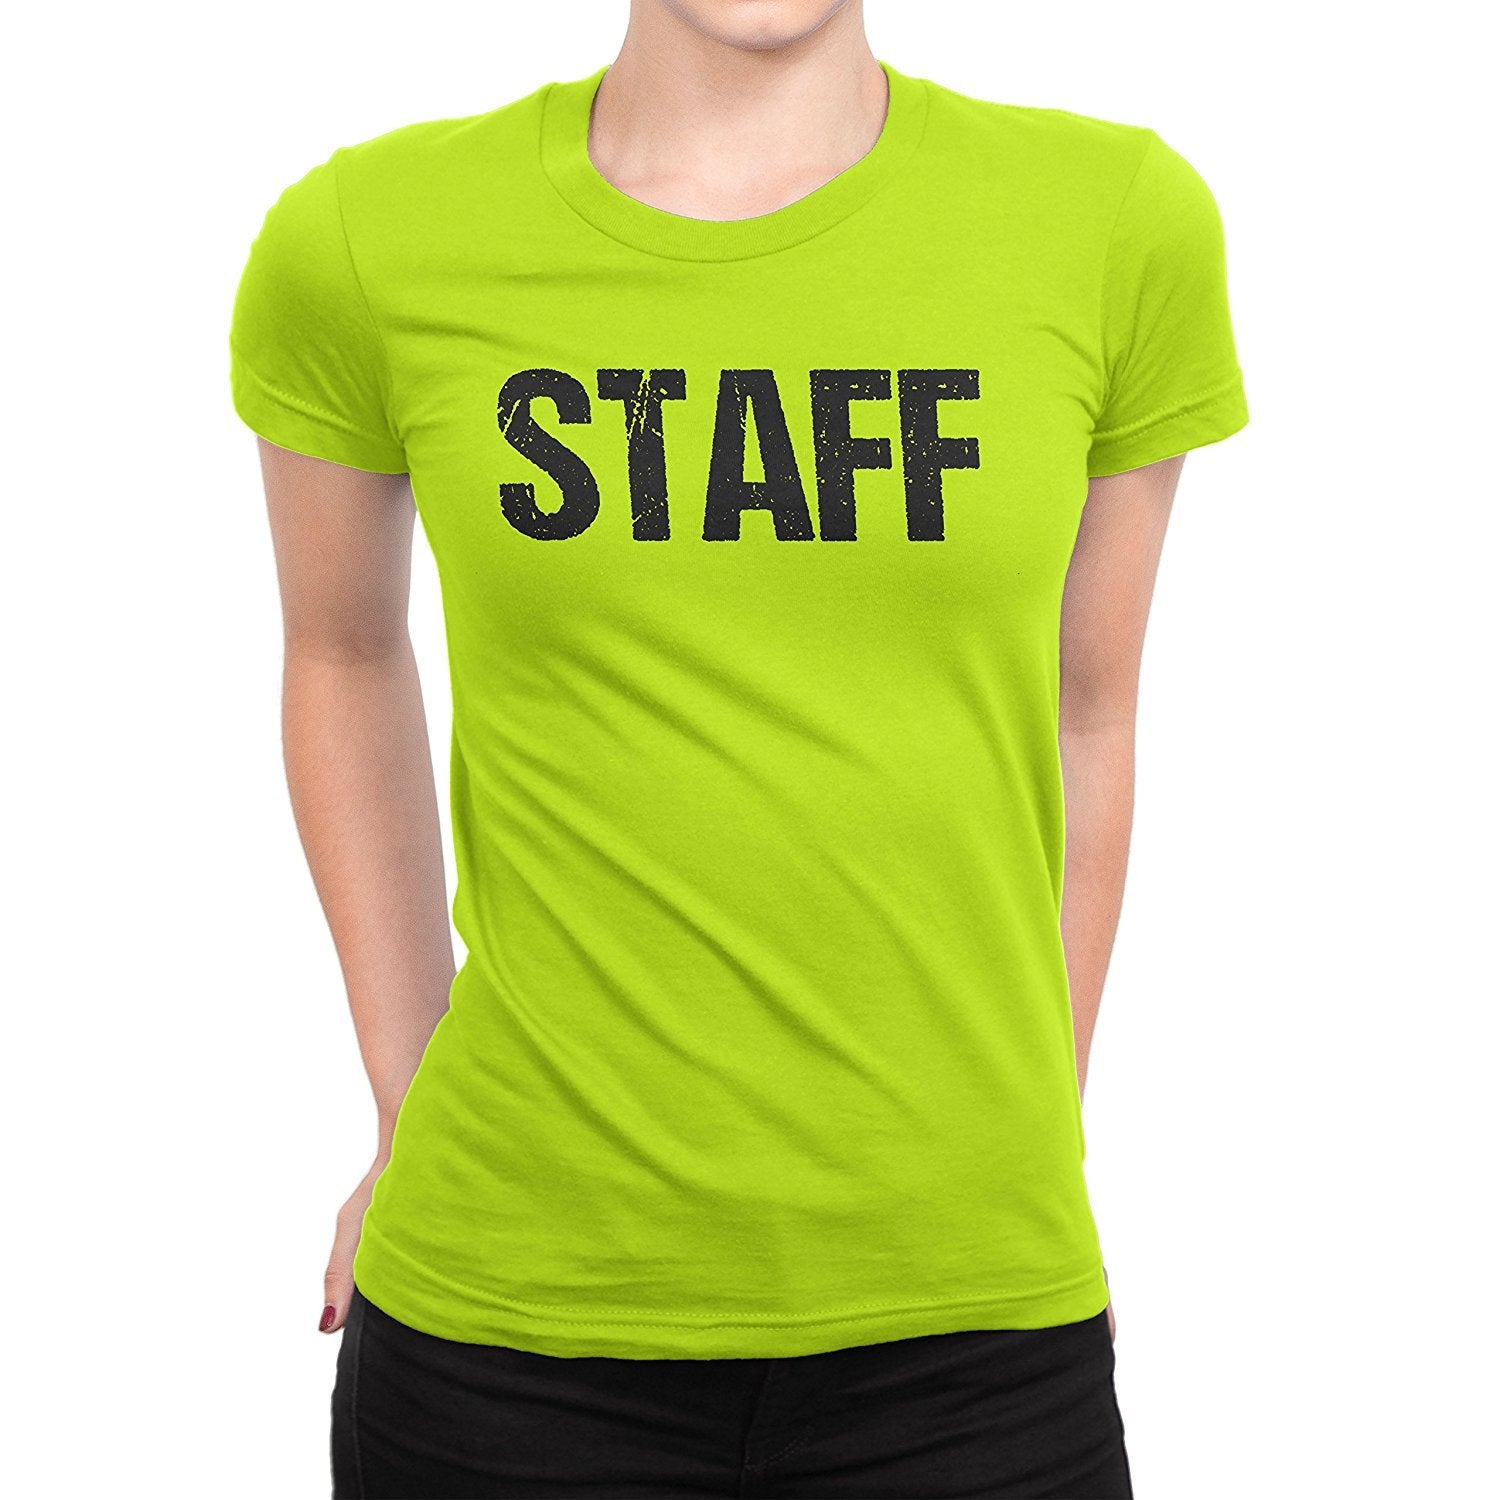 Staff Ladies Short Sleeve T-Shirt (Distressed Design, Bright Yellow)